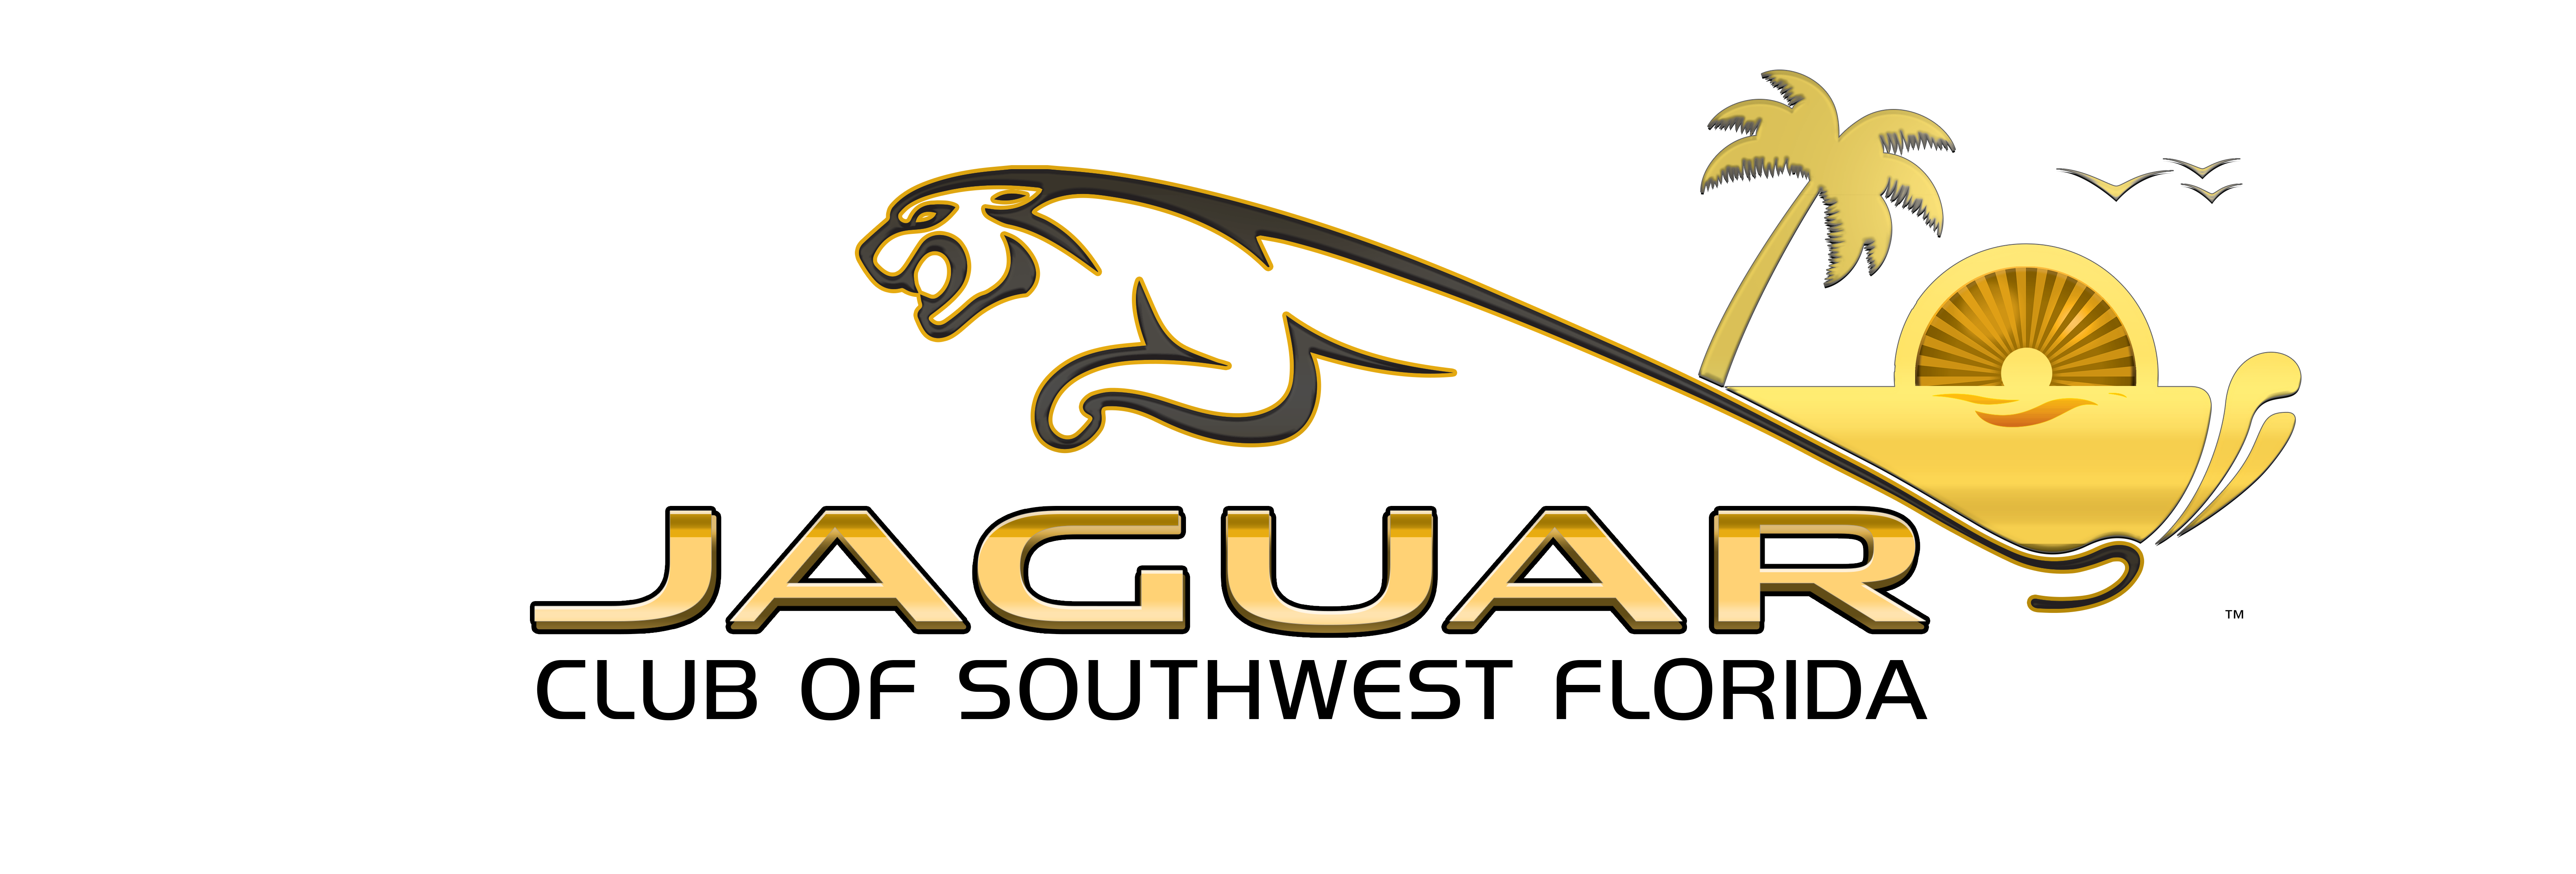 Jaguar Club of Southwest Florida